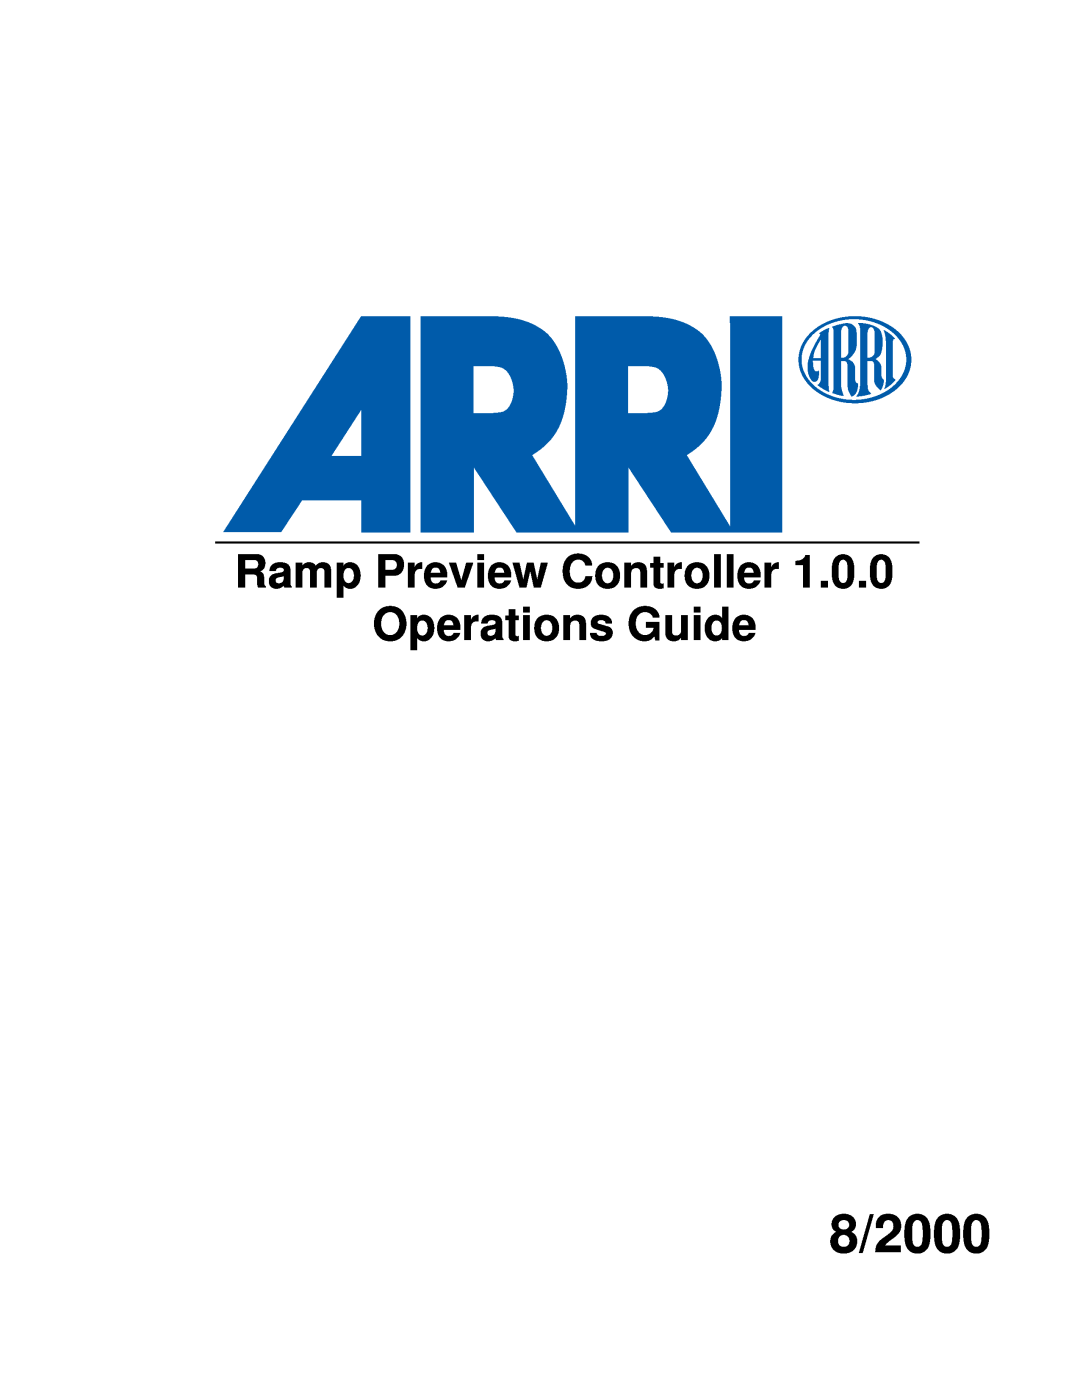 ARRI ARRI Ramp Preview Controller manual 8/2000, Ramp Preview Controller Operations Guide 